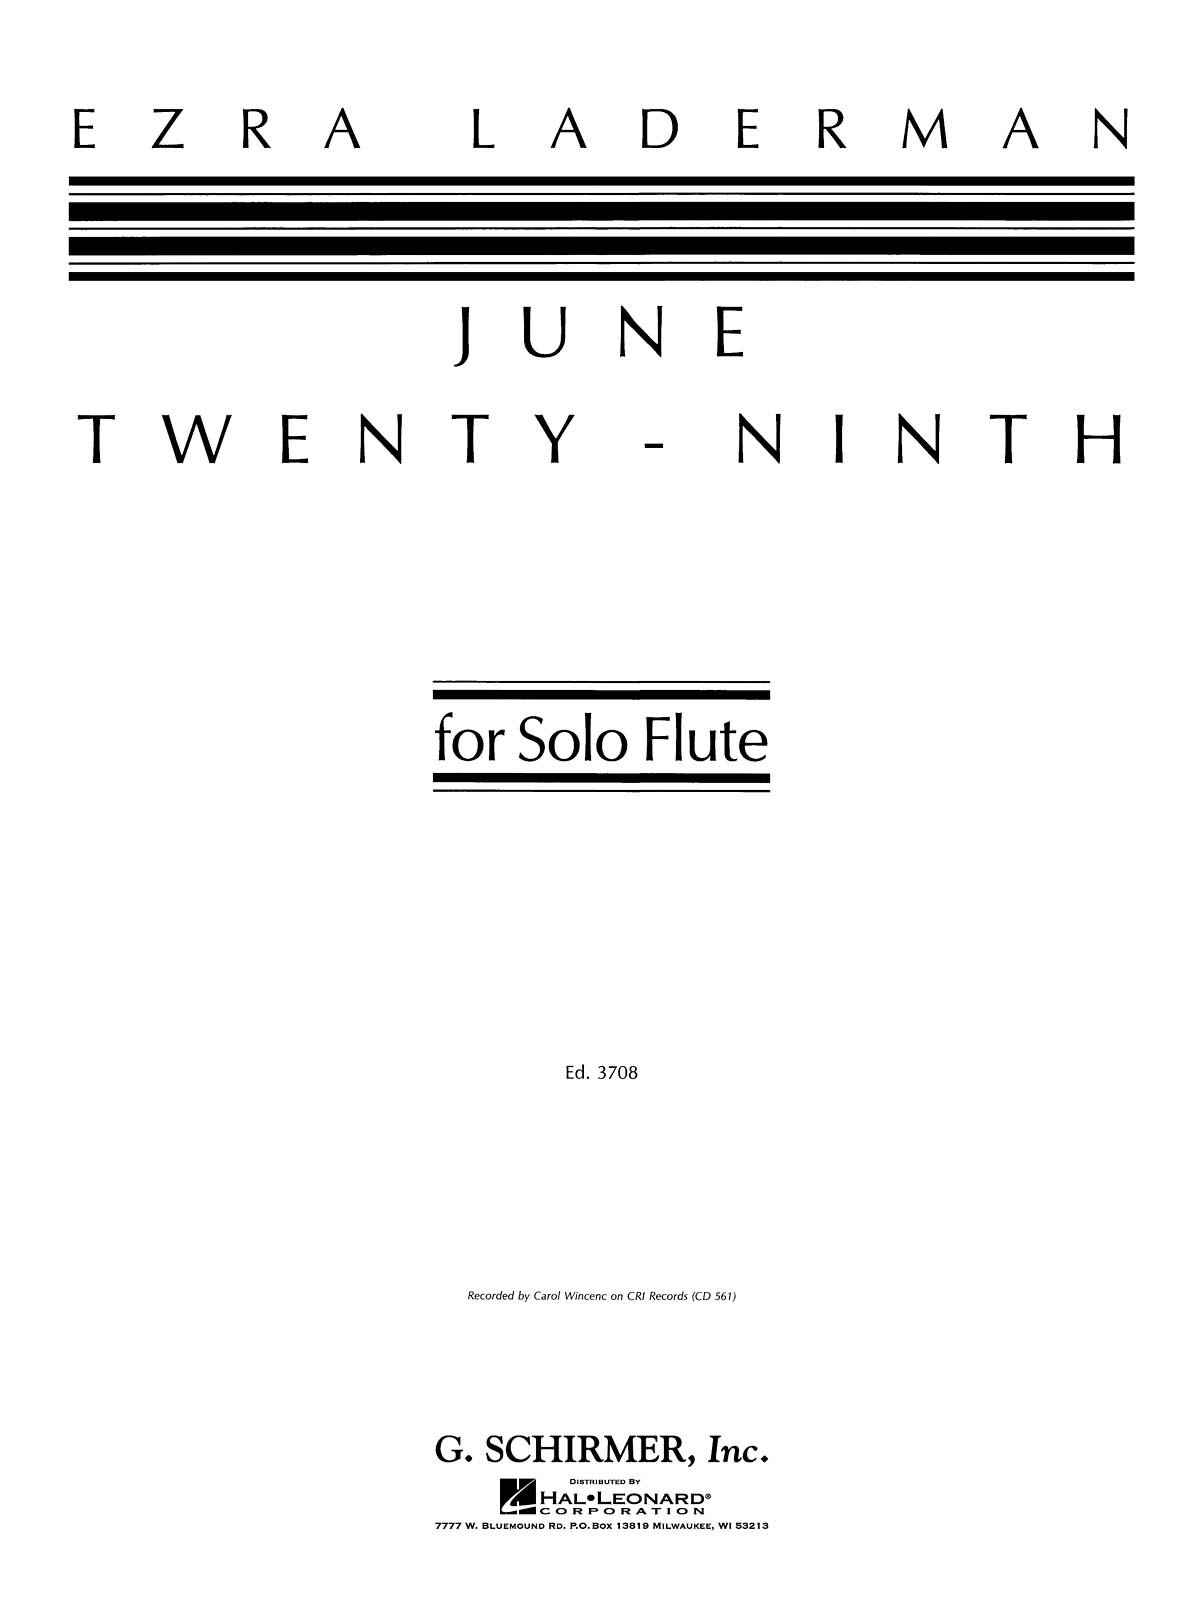 June Twenty-Ninth (Flute)